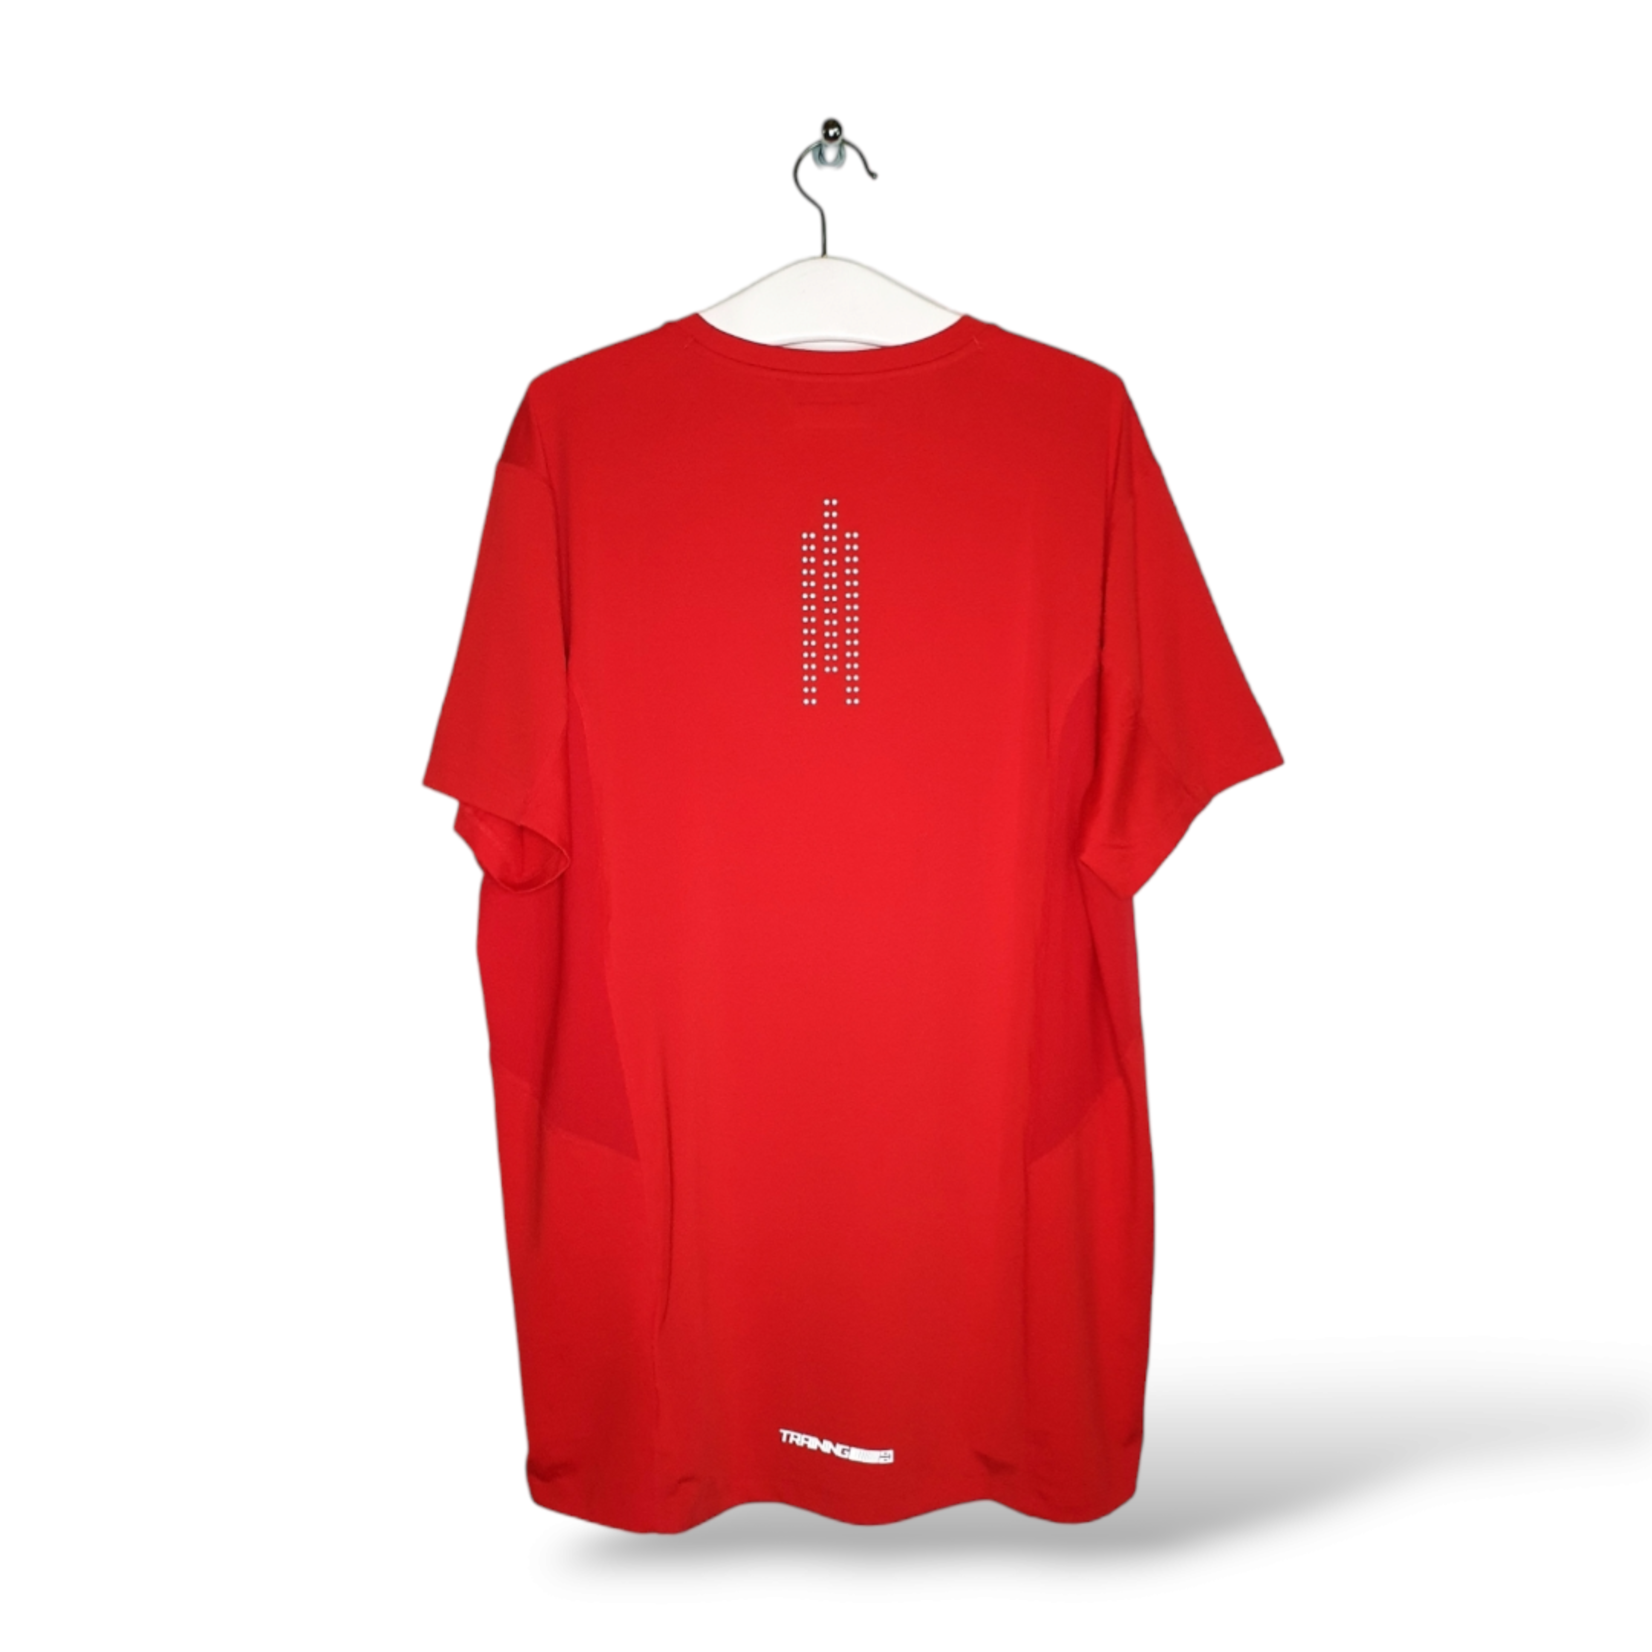 Fanwear Fanwear Ferrari training T-shirt